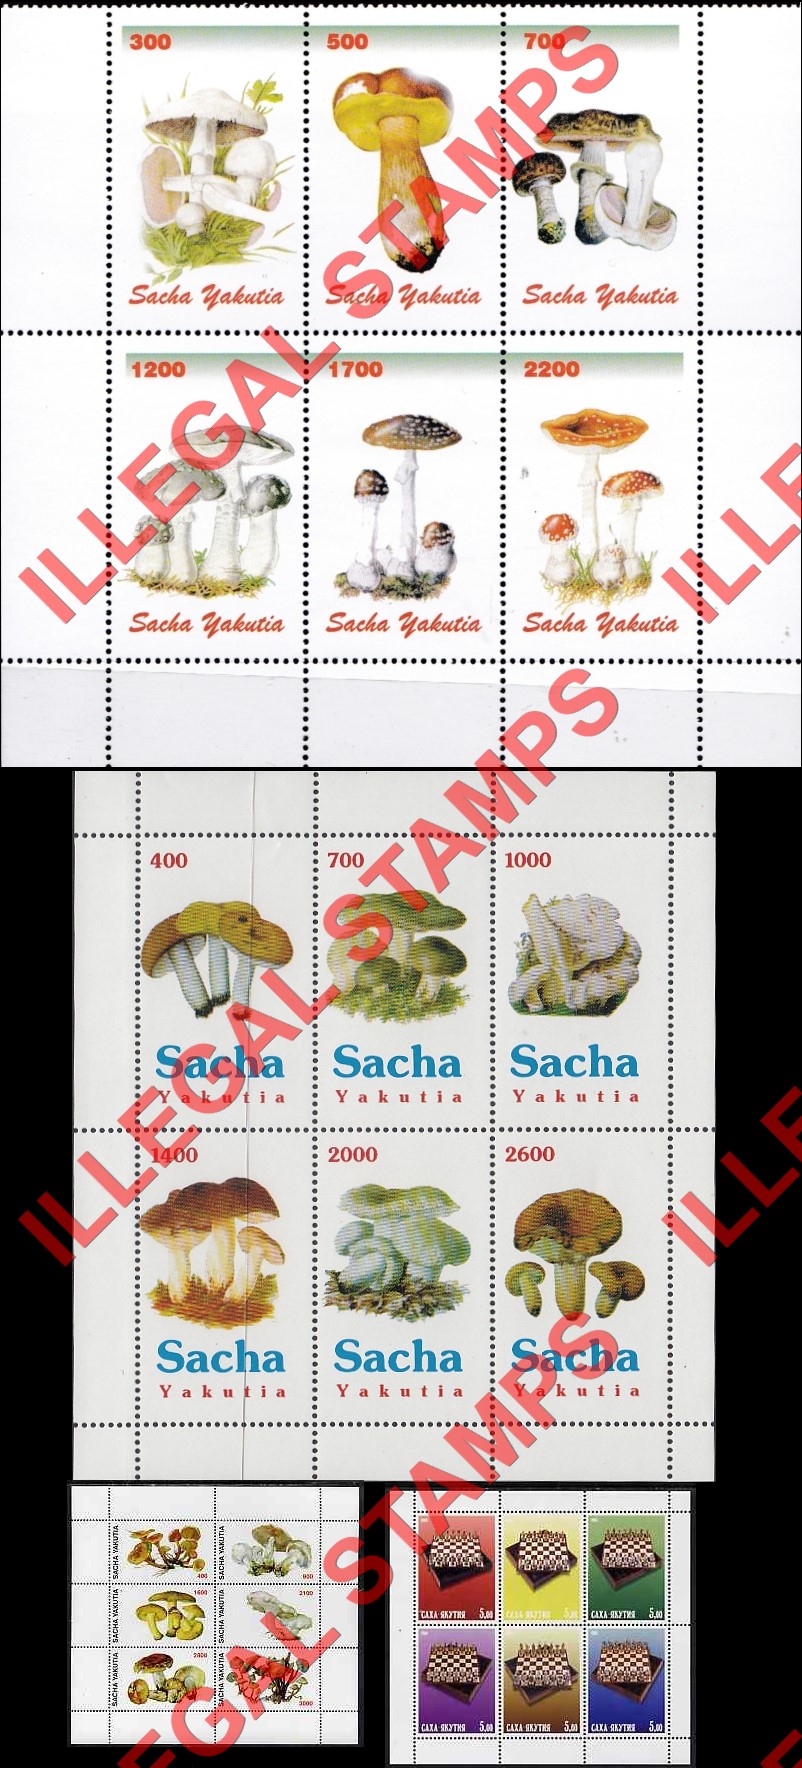 Republic of Sakha Yakutia 1998 Counterfeit Illegal Stamps (Part 1)